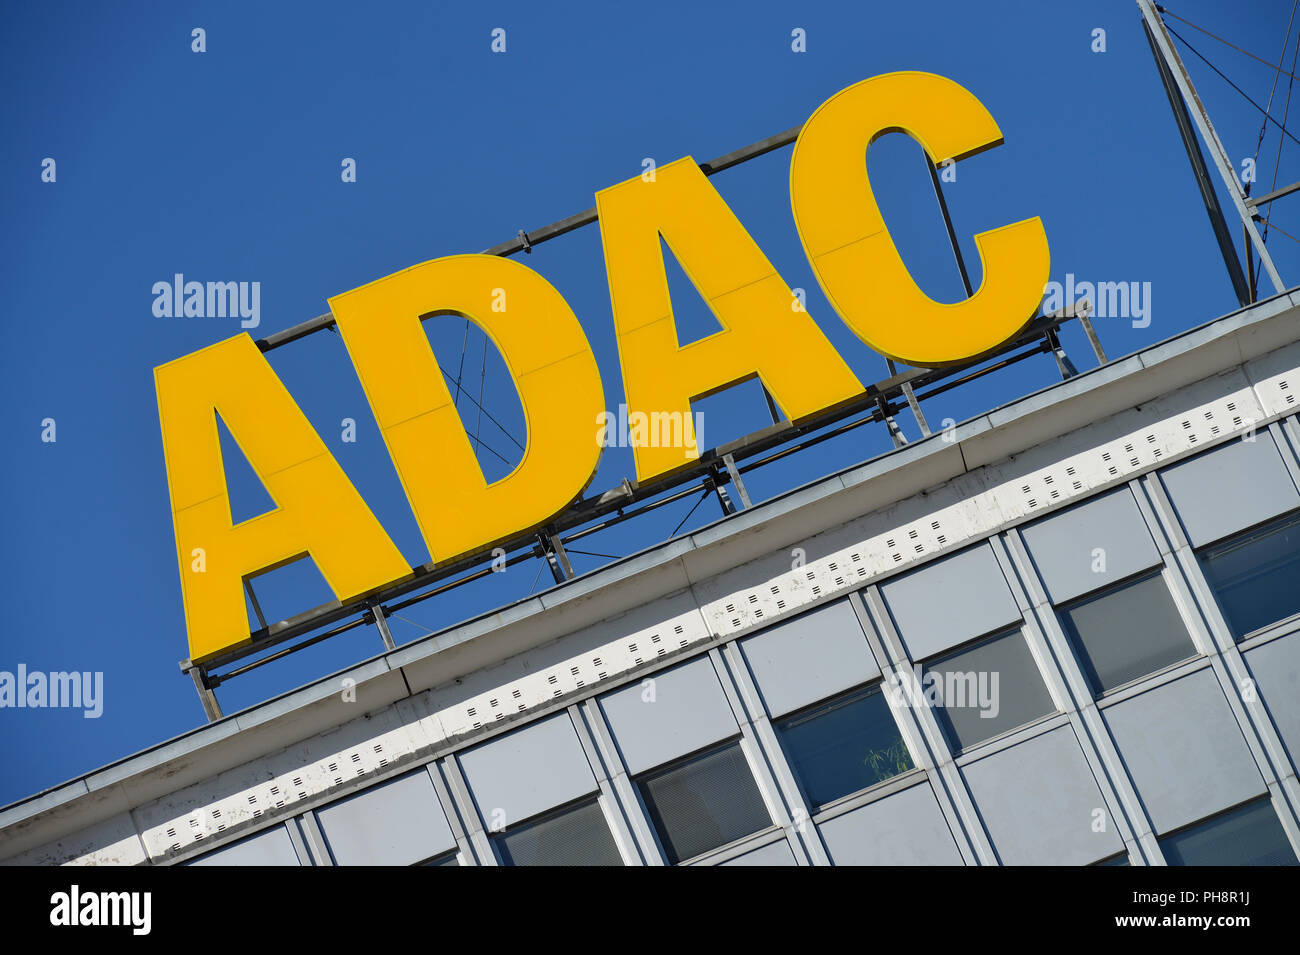 ADAC, Alexanderstrasse, Mitte, Berlin, Deutschland Foto de stock